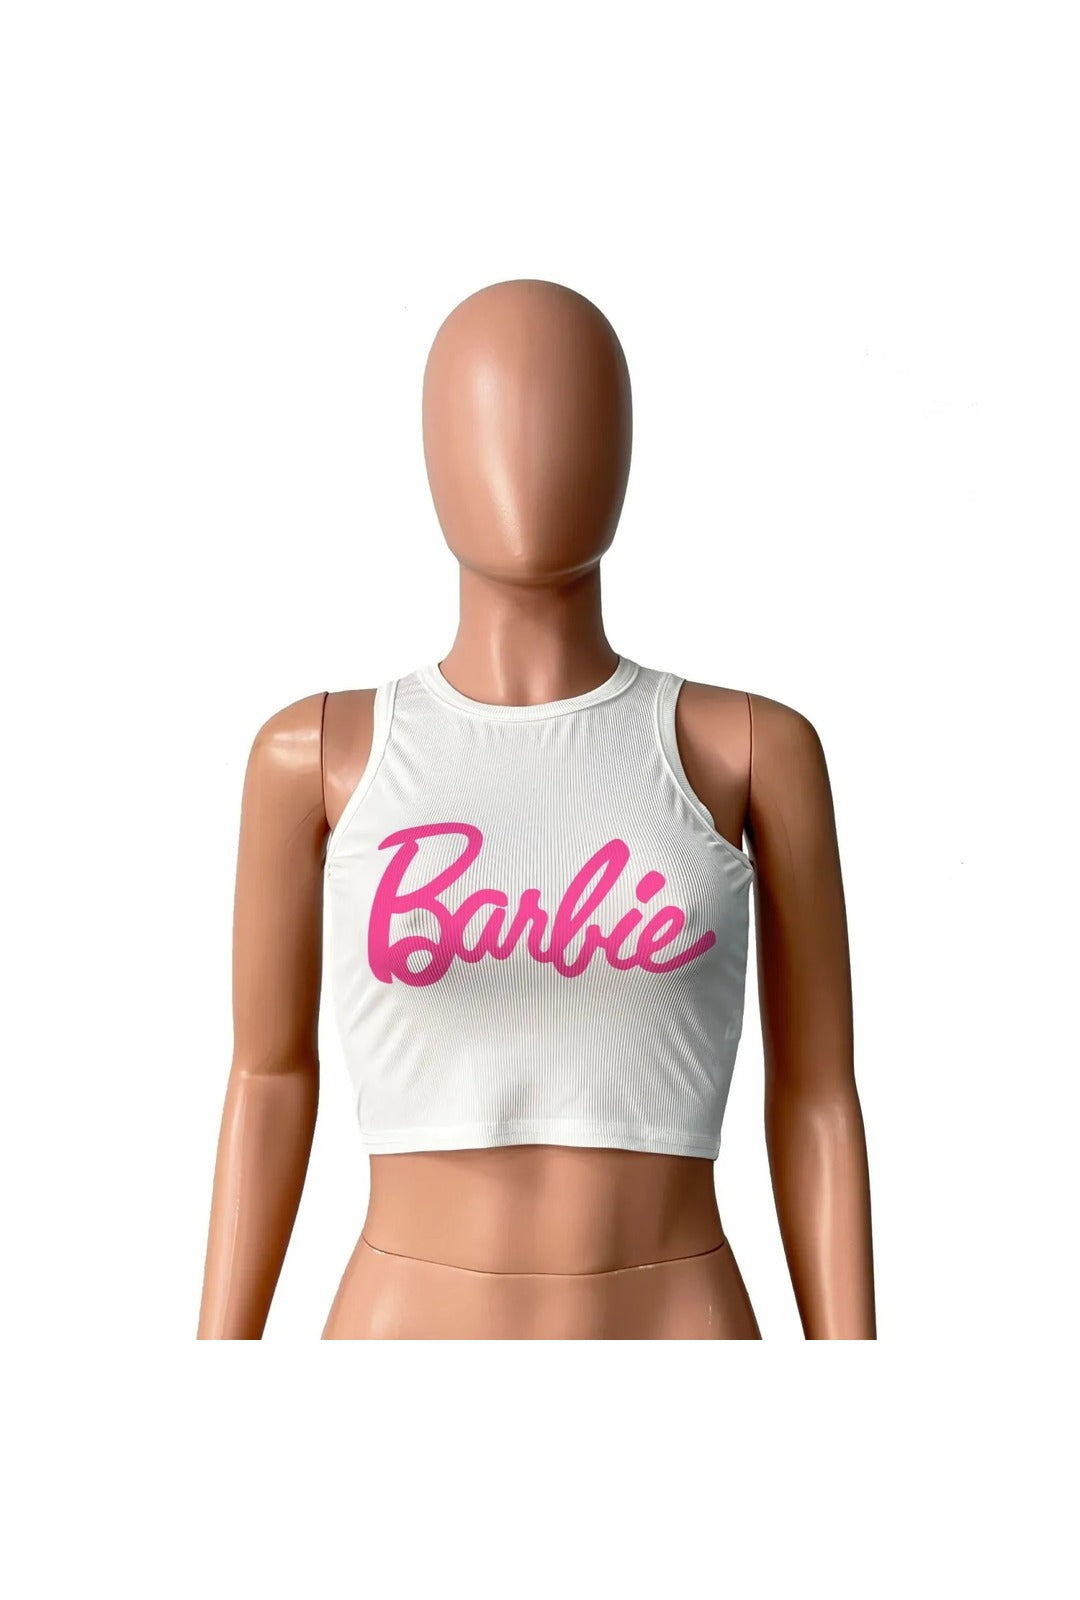 White Ribbed Barbie Crop Top Perth